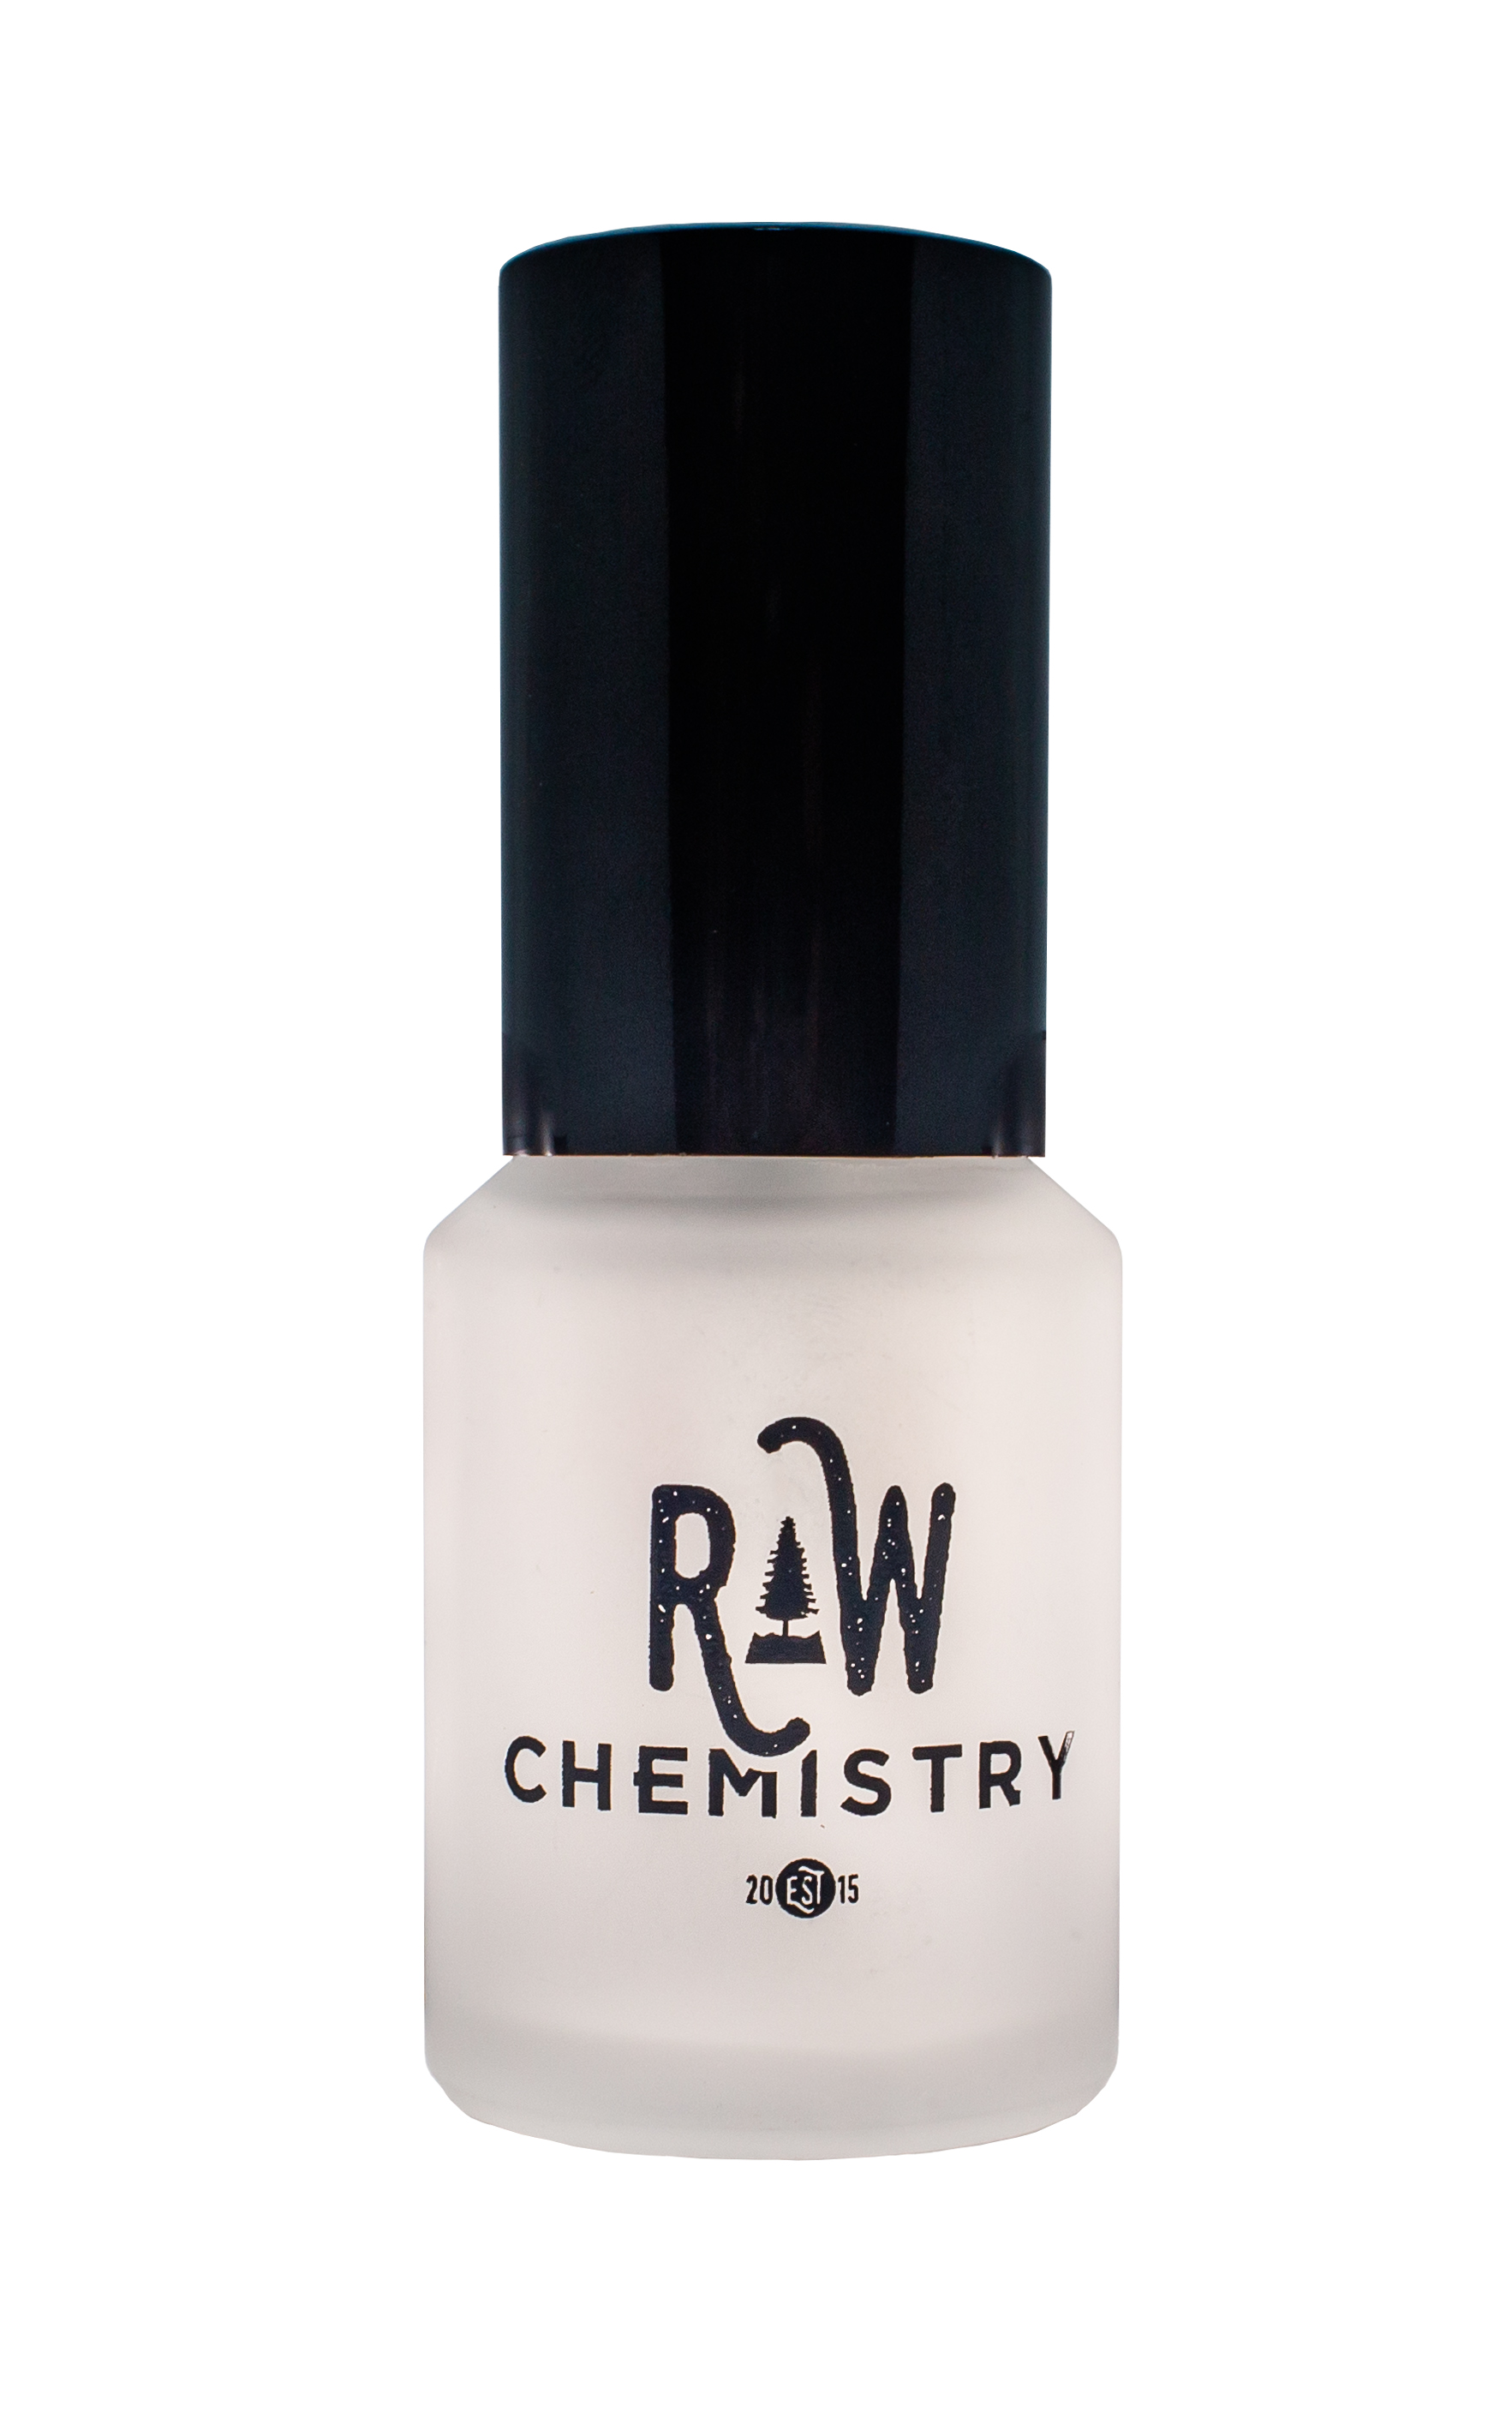 Raw Chemistry Bold Men's Pheromone Cologne Spray - image 3 of 5